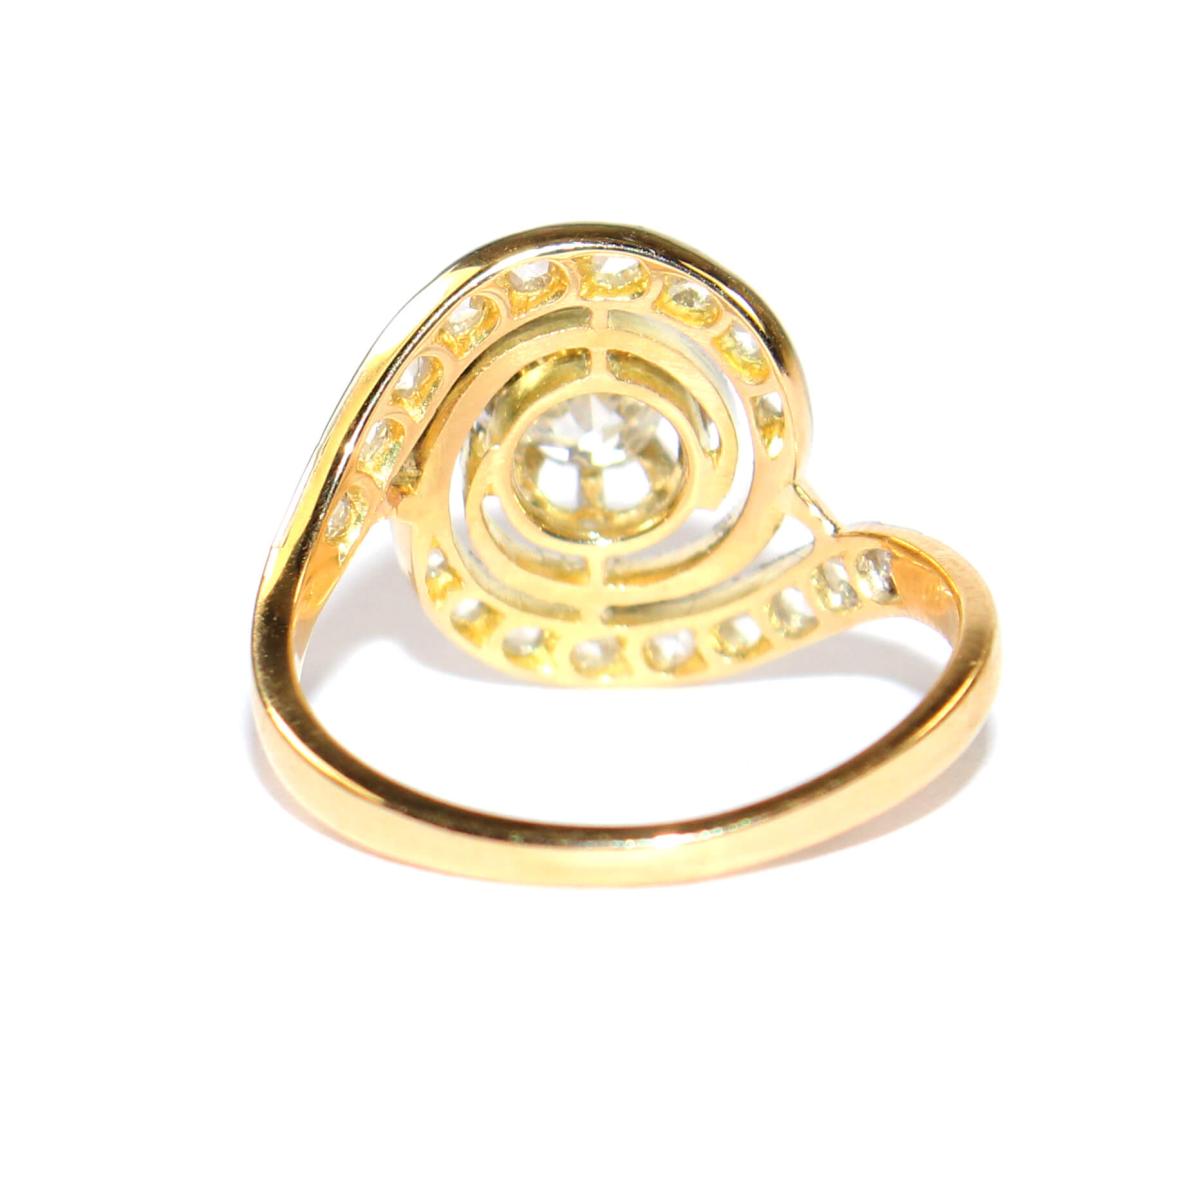 Edwardian Diamond Swirl Cluster Ring circa 1920